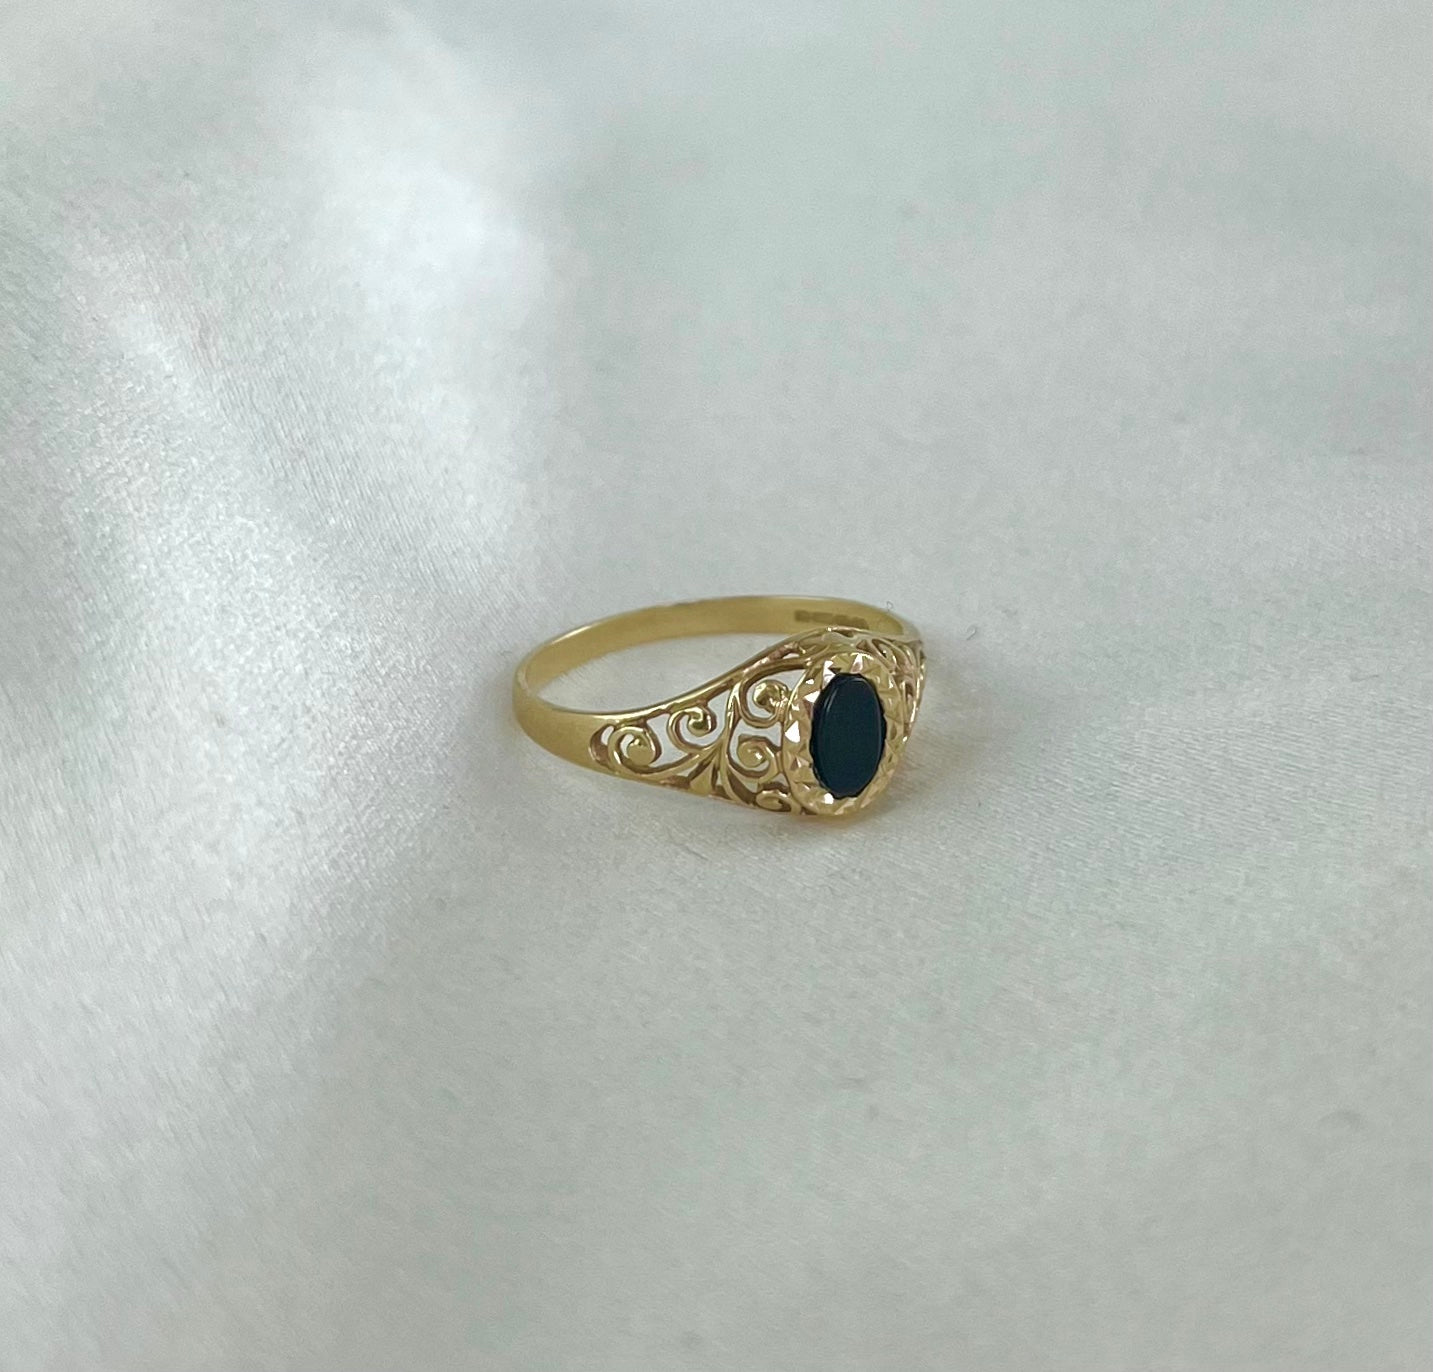 Vintage 9ct Gold Black Onyx Ring, Size O UKVintage 9ct Gold Black Onyx Ring, Size O UK